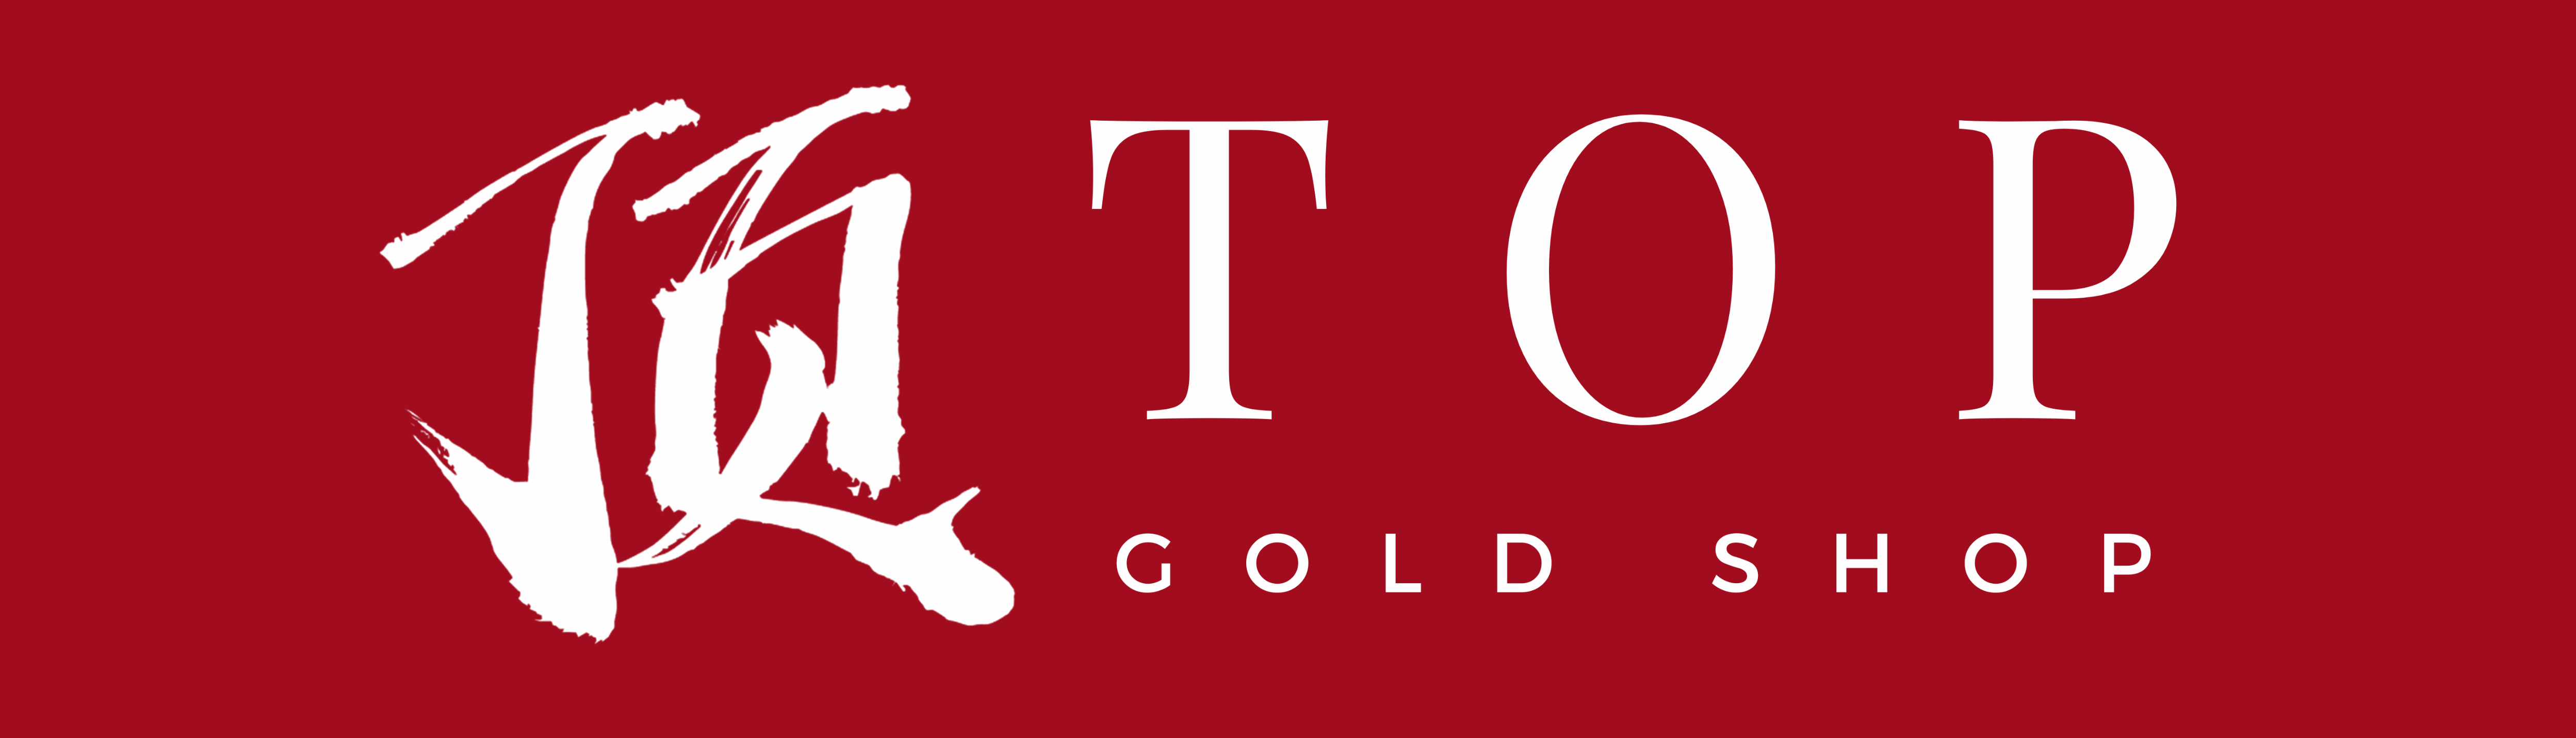 Top gold shop global site logo